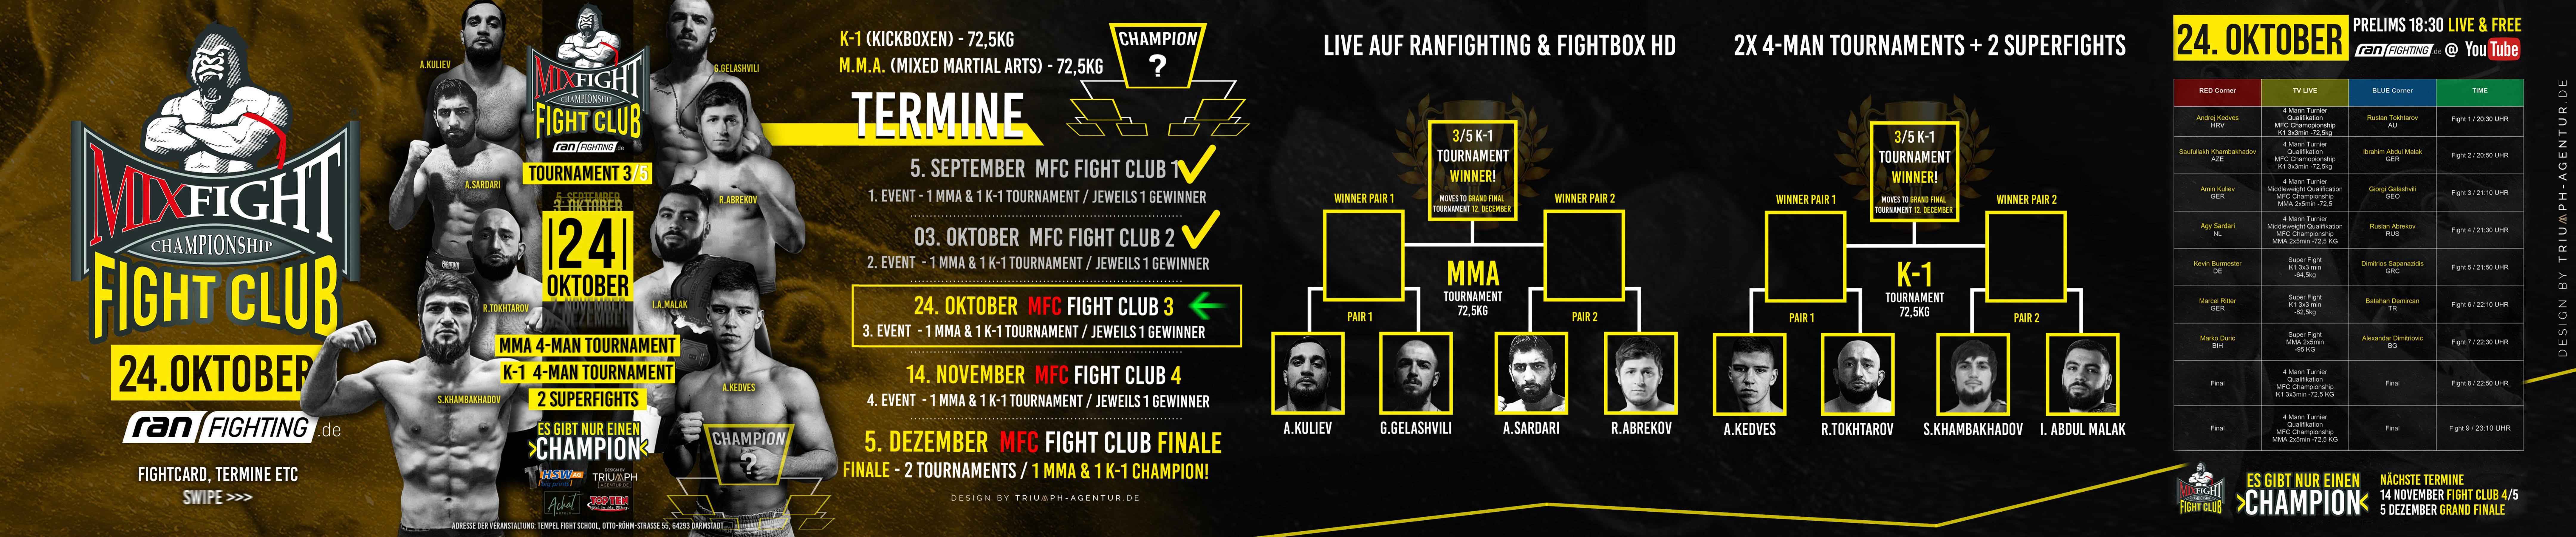 Mixfight Championship Fight Club